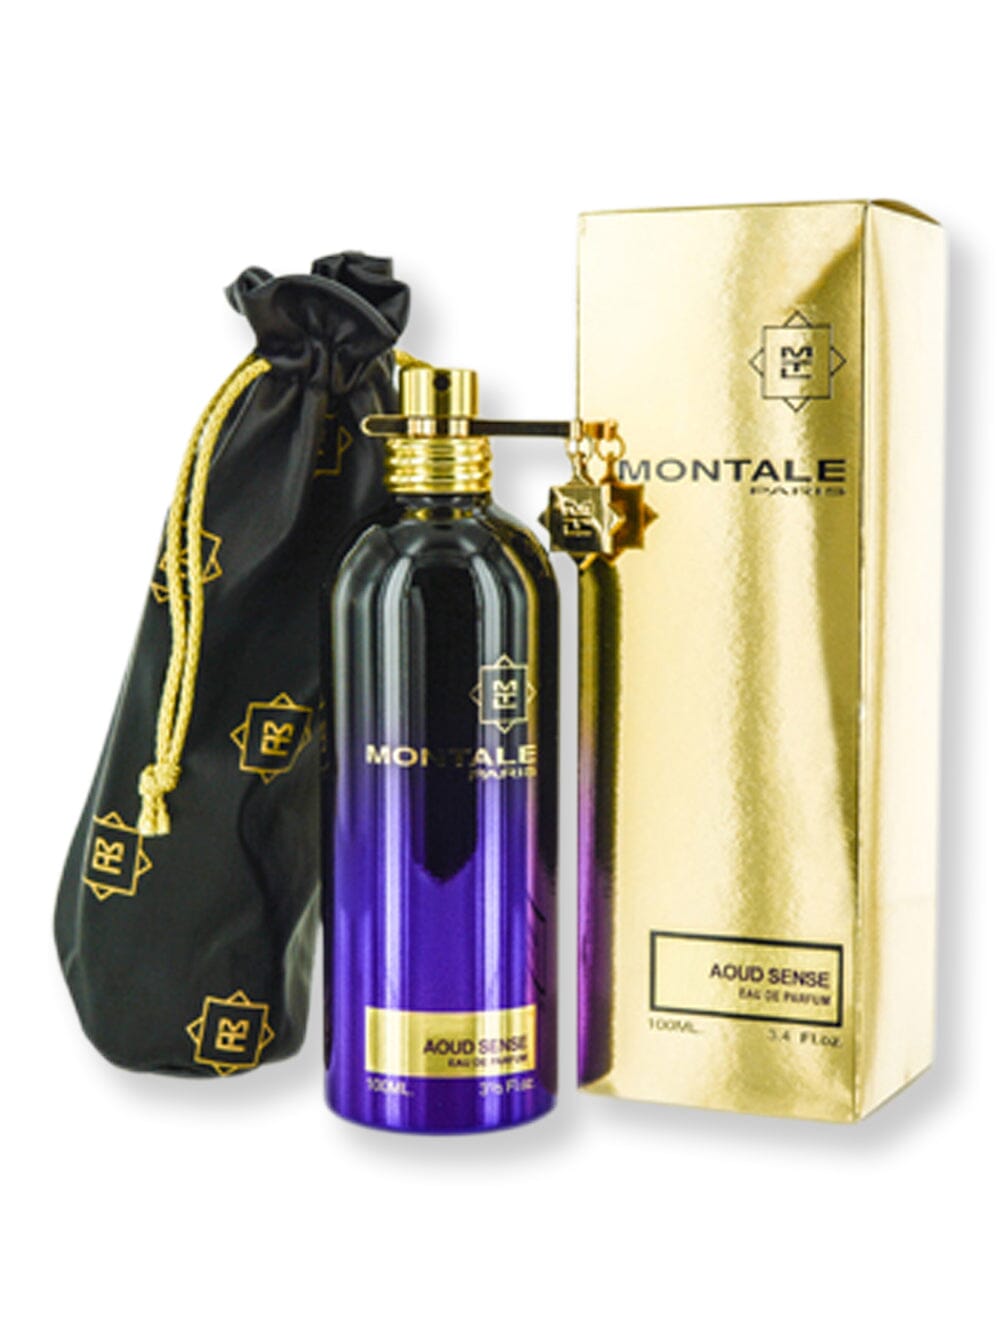 Montale Montale Aoud Sense EDP Spray 3.3 oz100 ml Perfume 